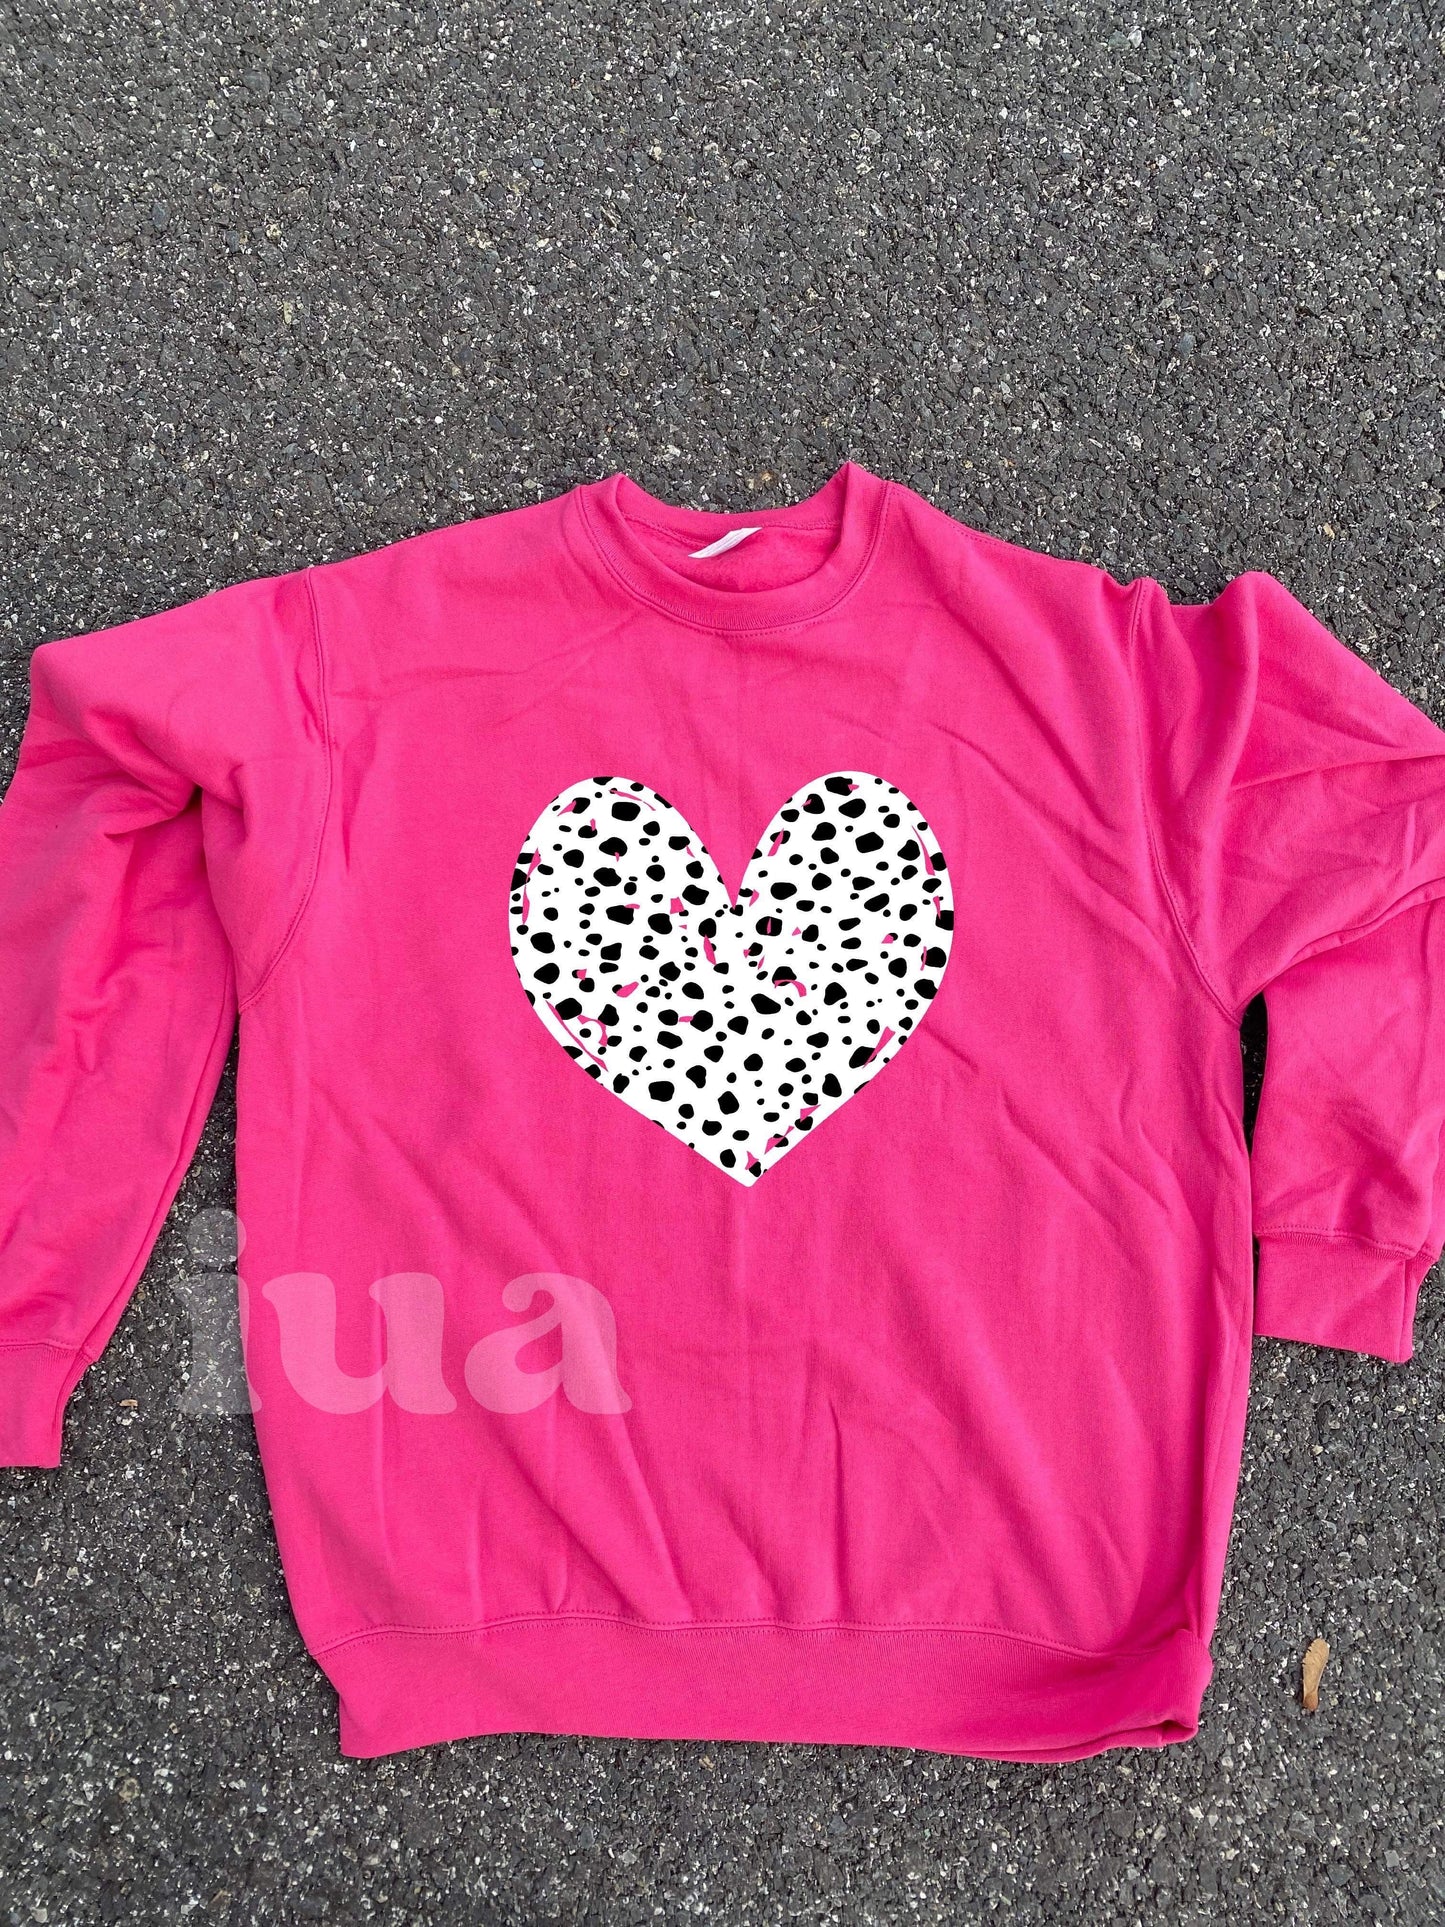 Dotted Heart Sweatshirt - PREORDER (SHIP DATE 12/12)